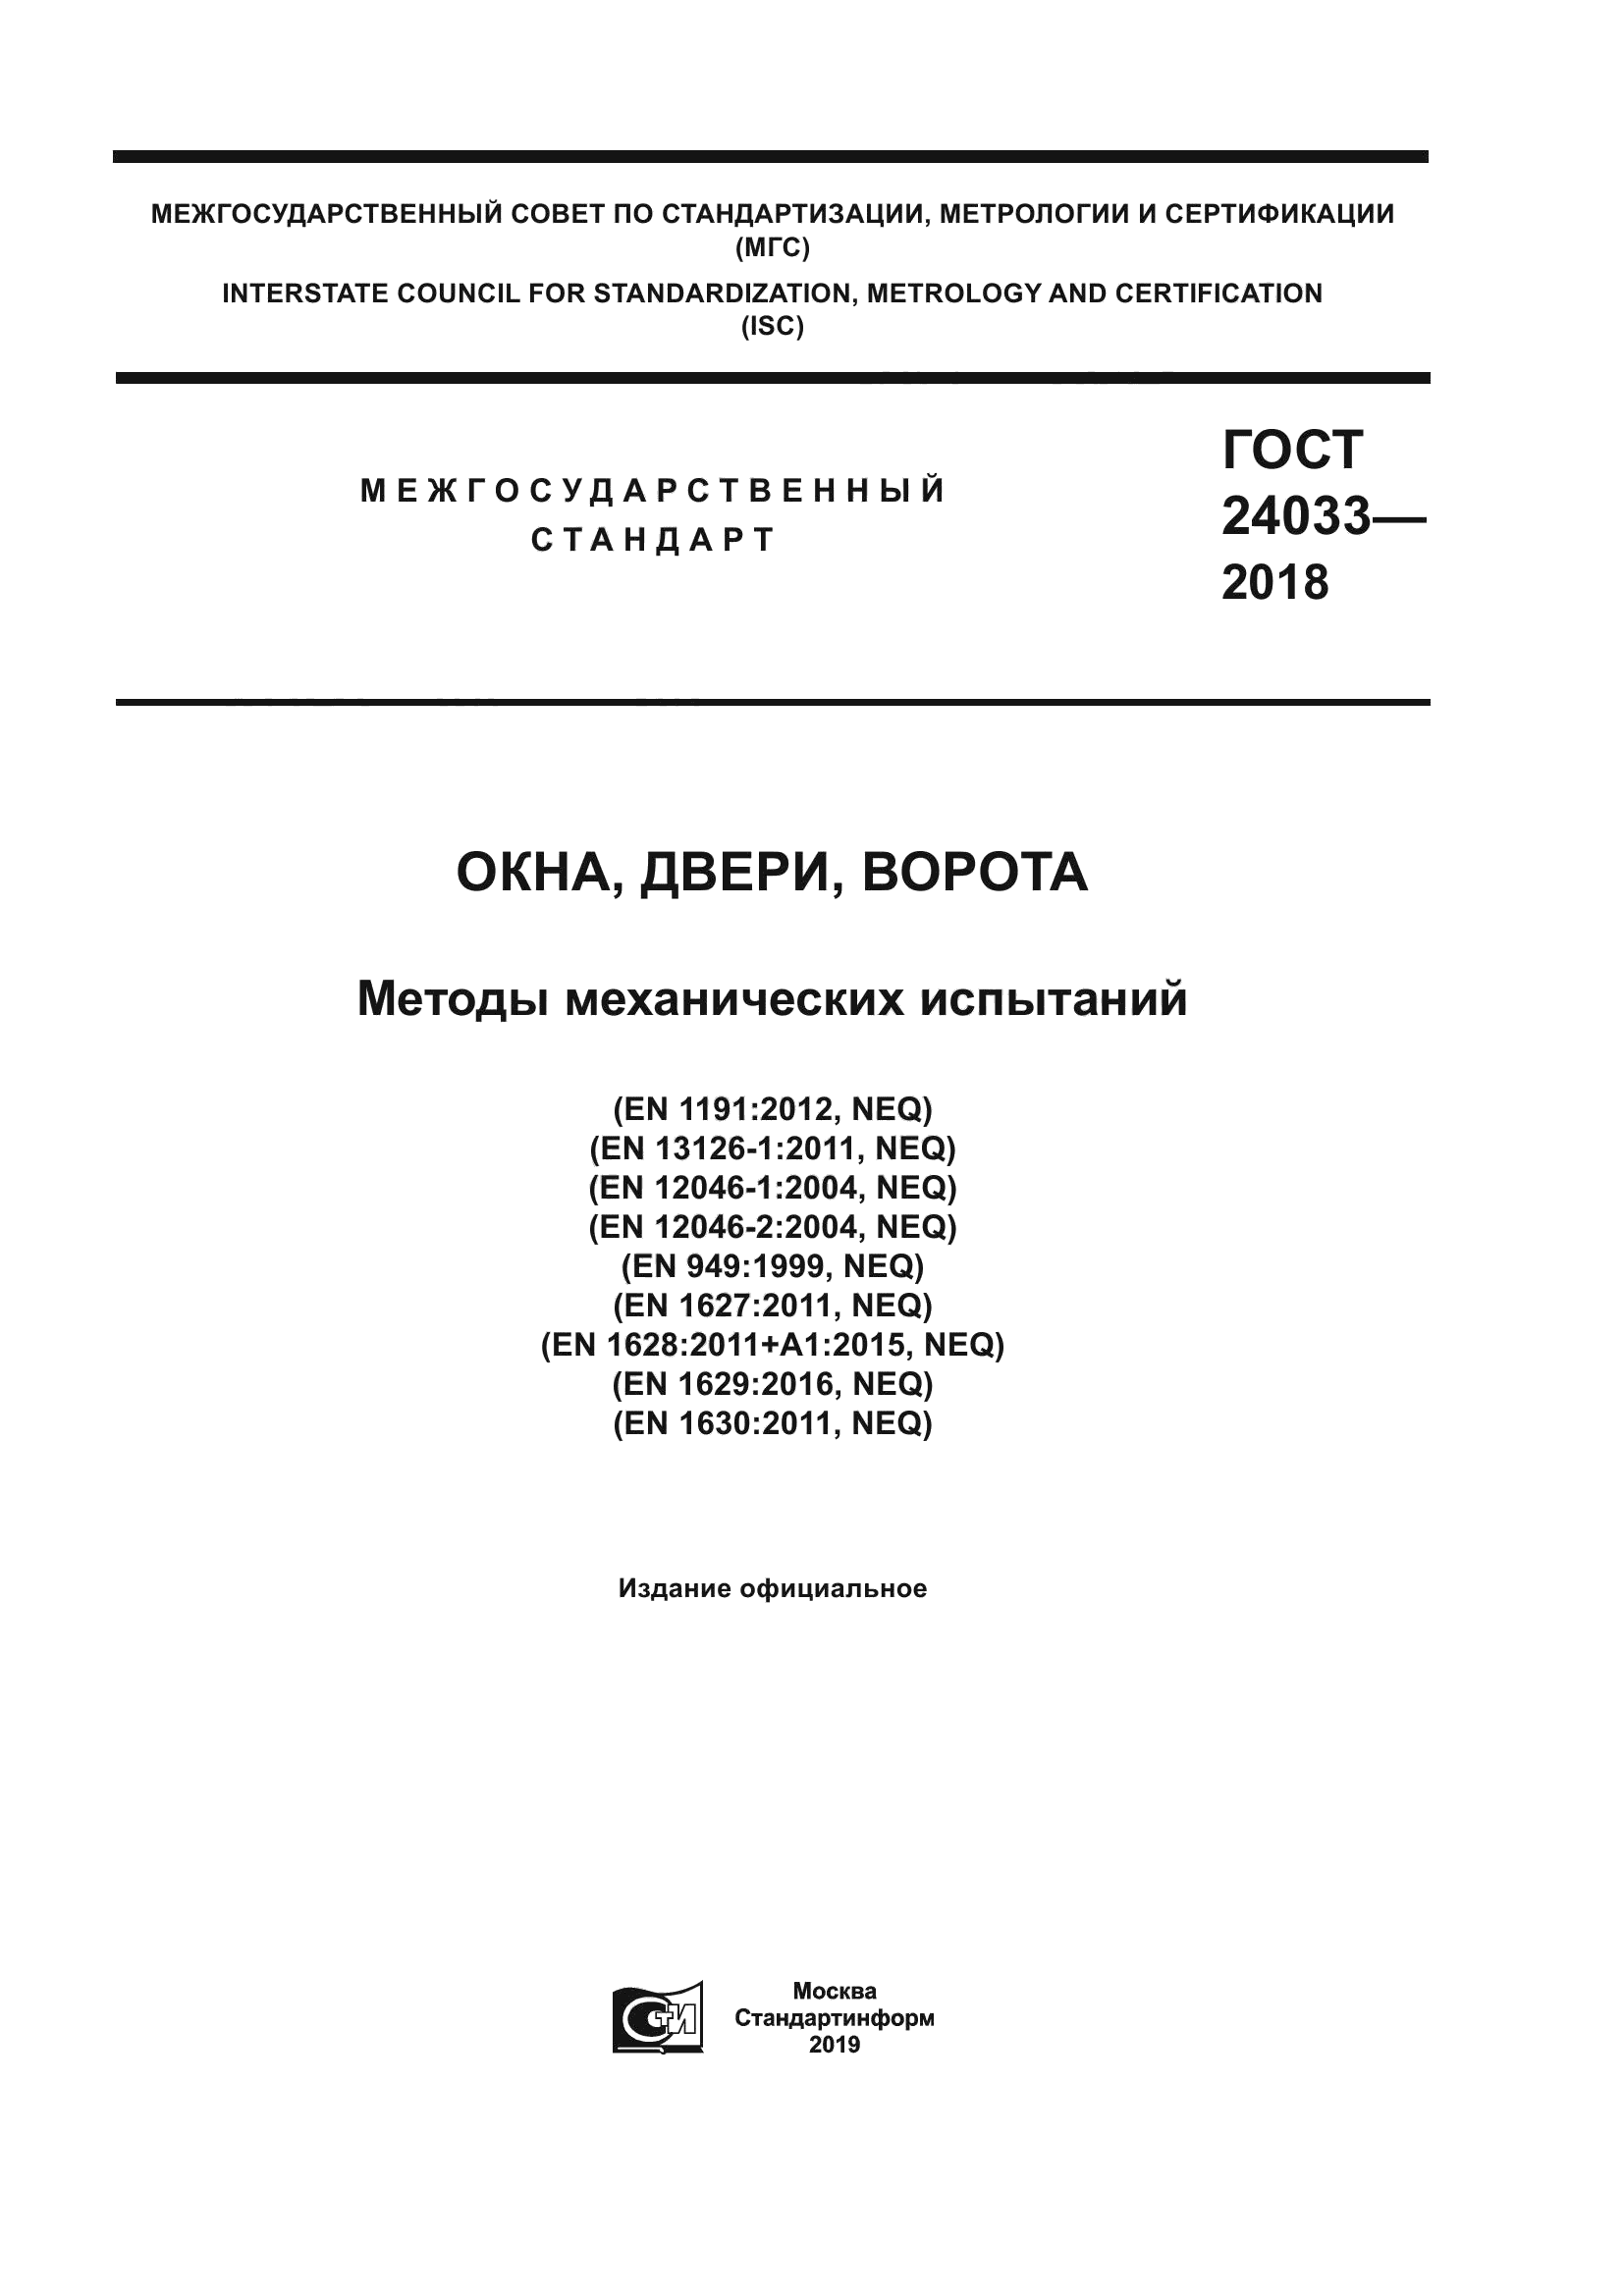 ГОСТ 24033-2018